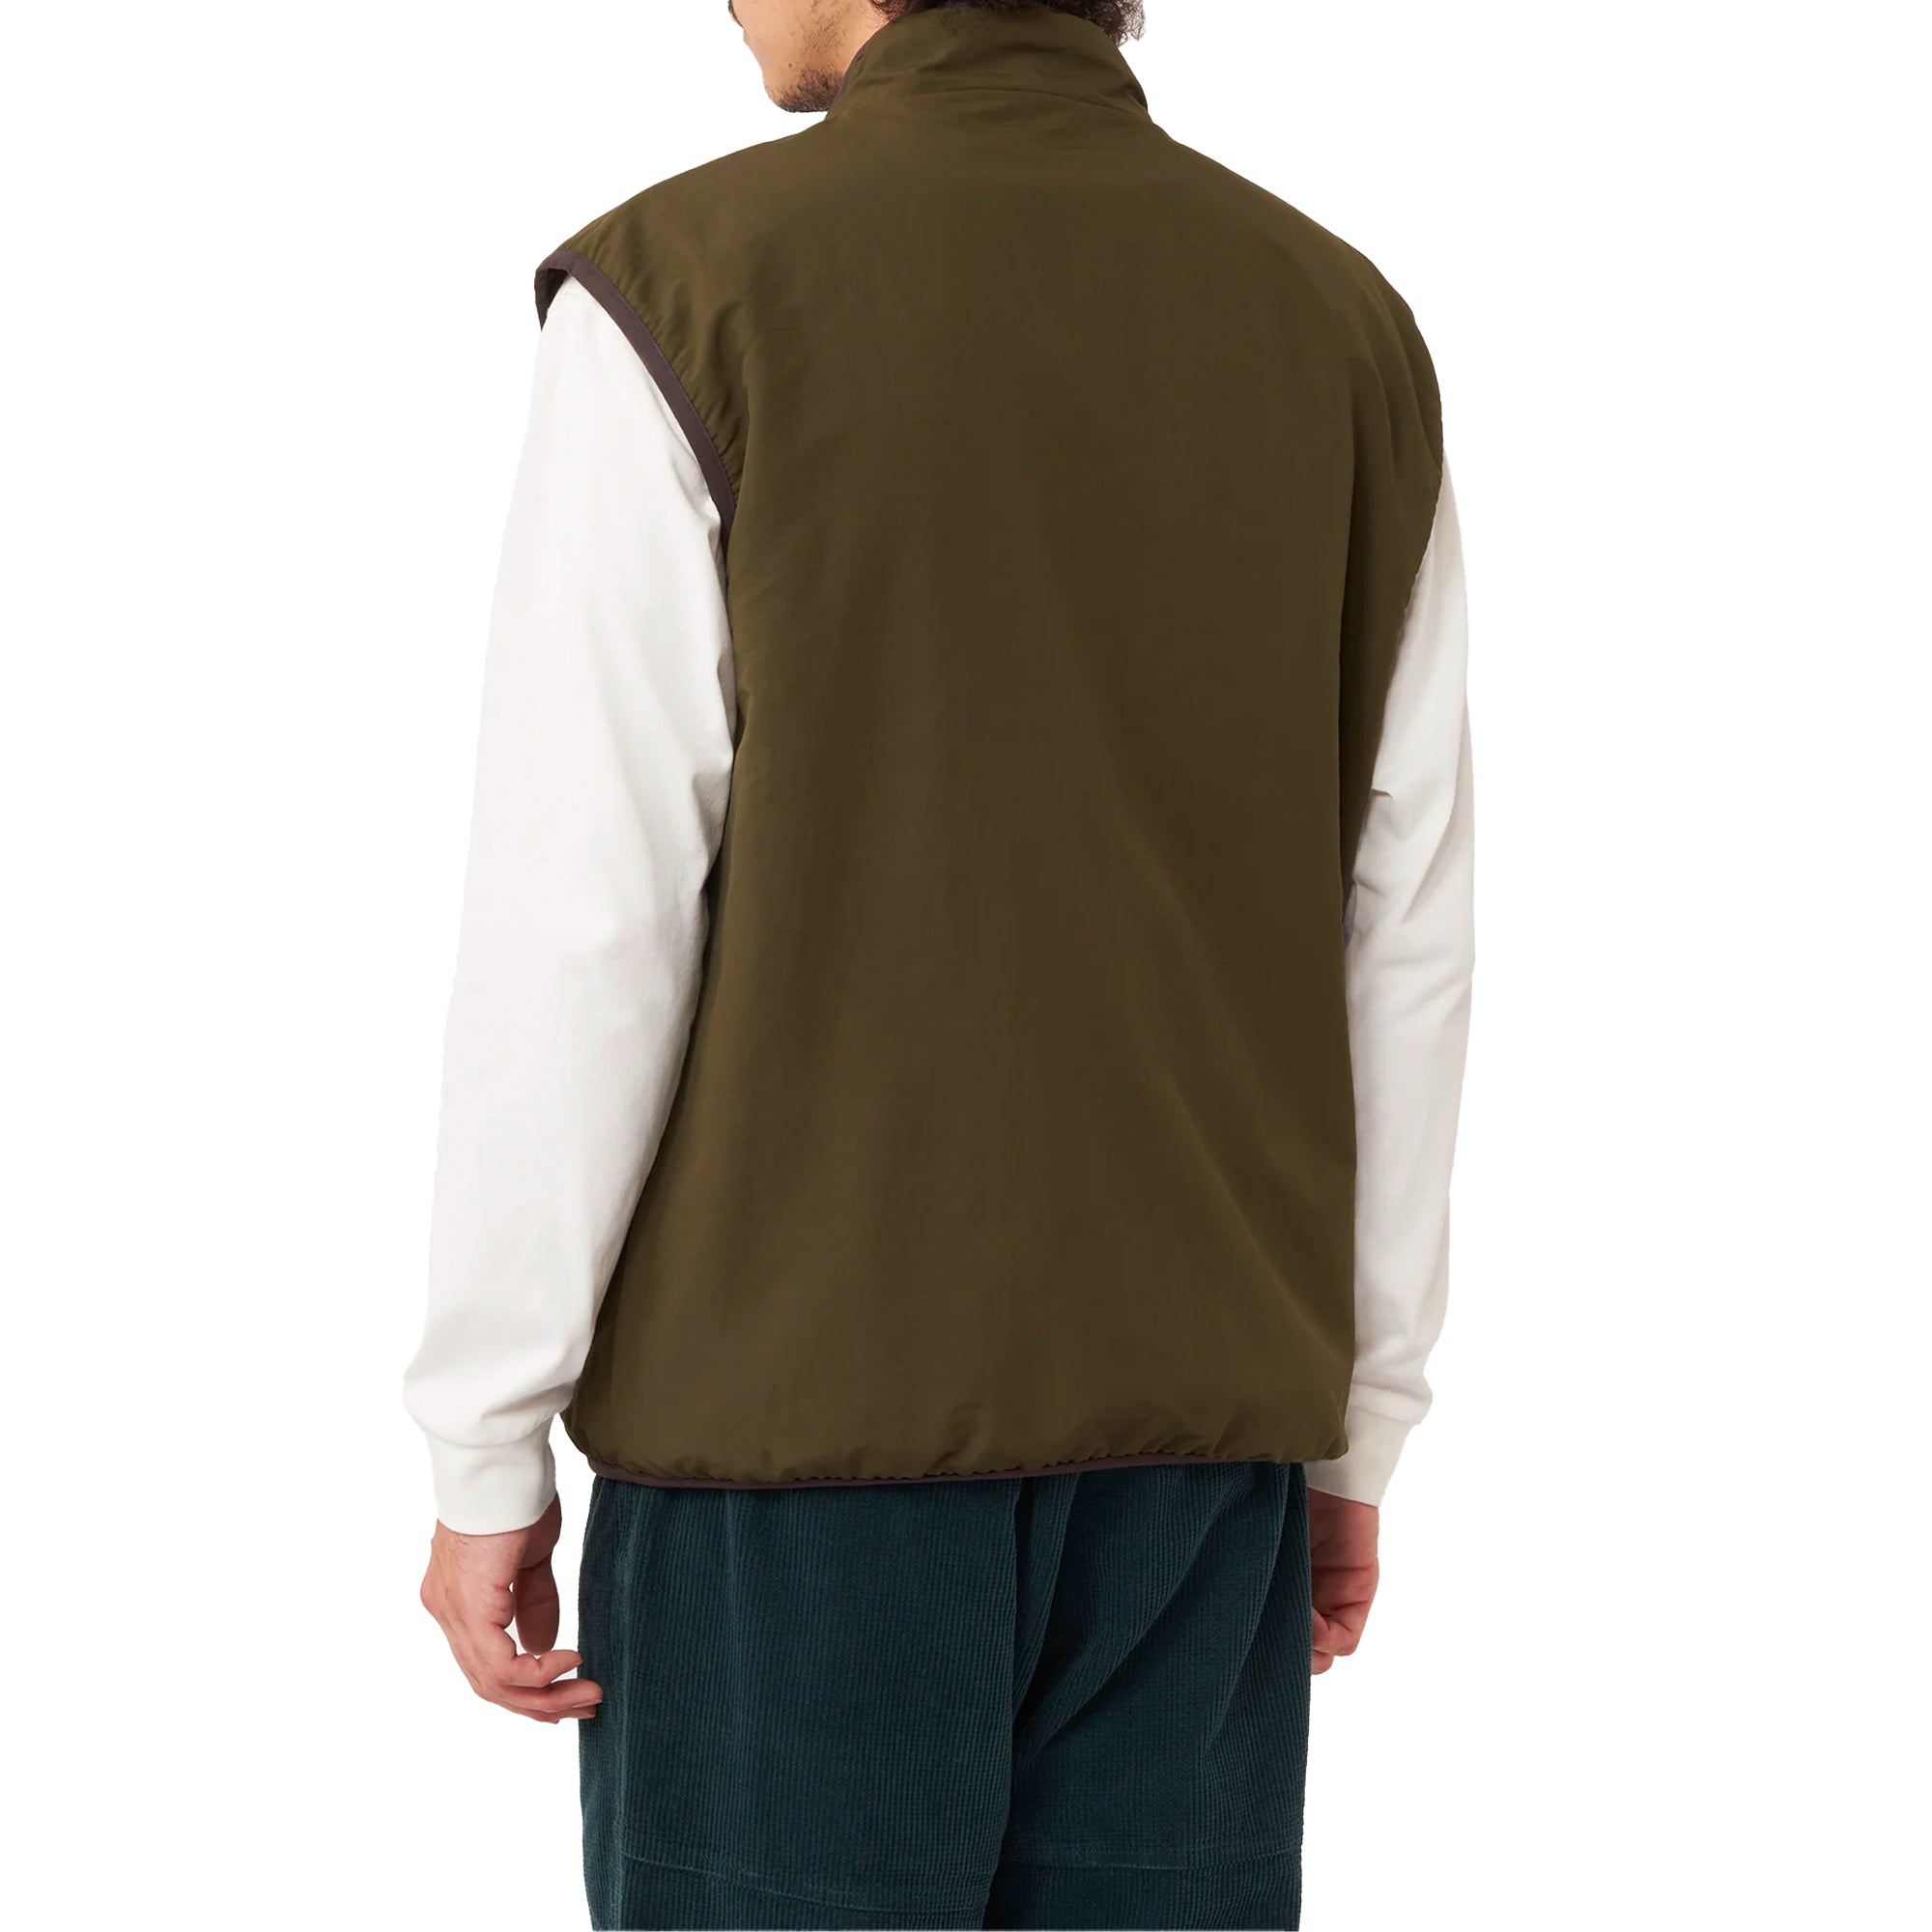 Gramicci Reversible Fleece Vest - Leaf Camo